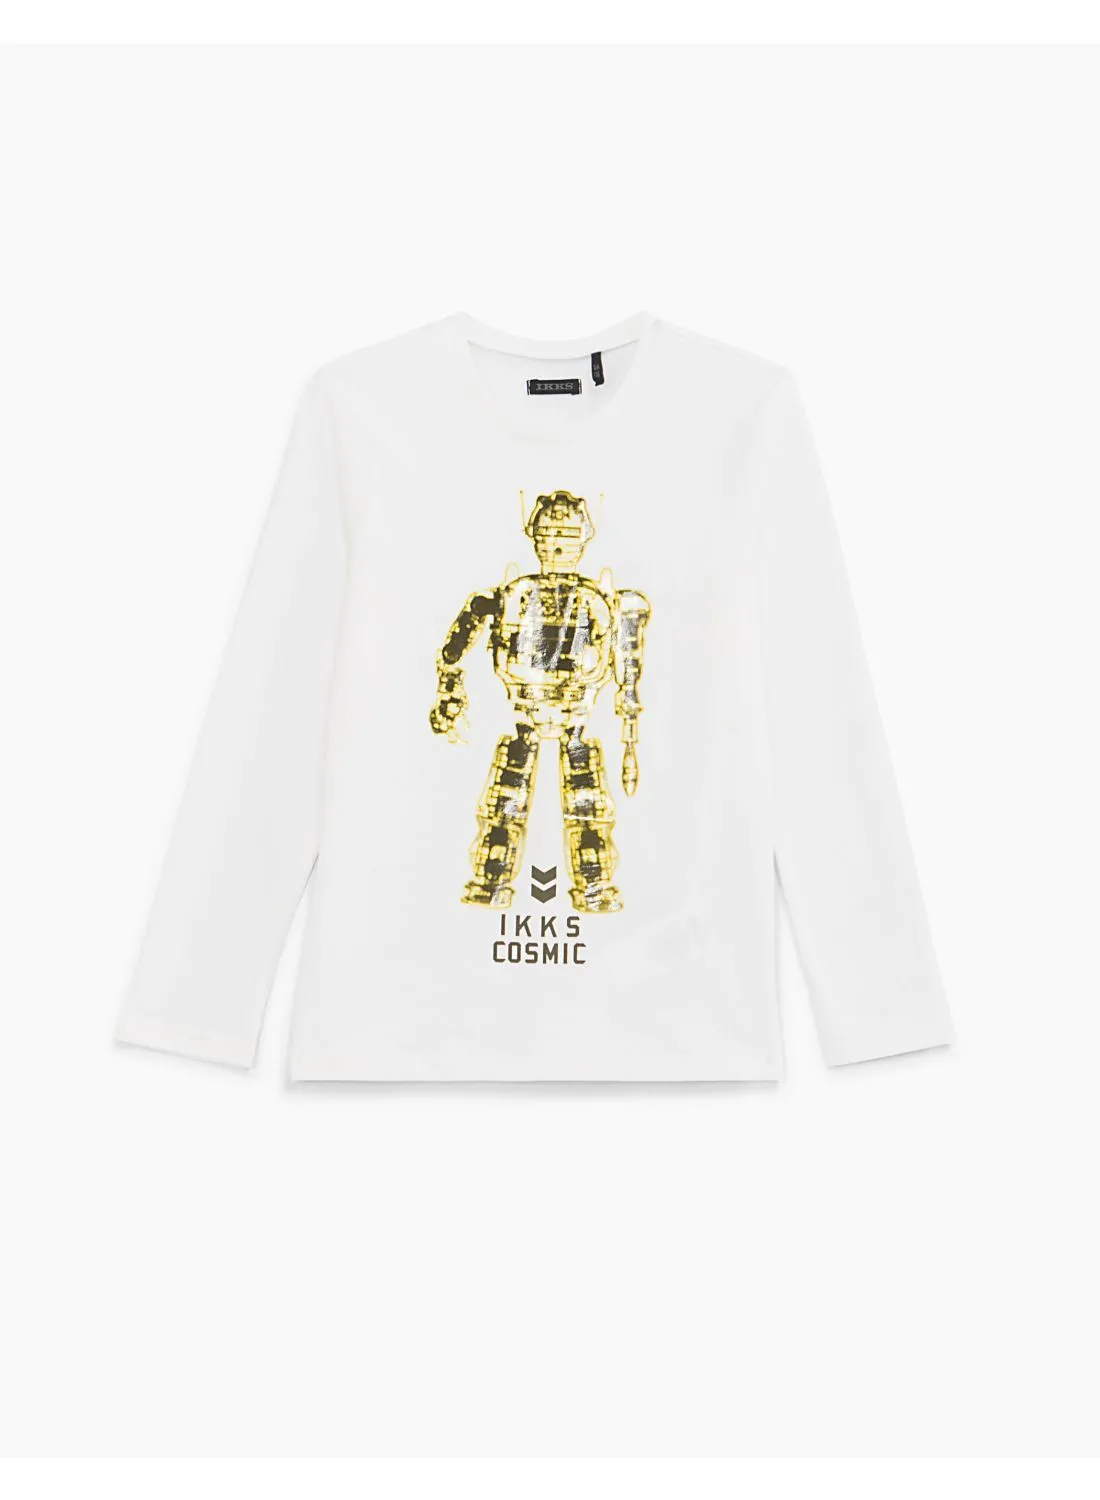 IKKS Robot Printed Long Sleeve T-Shirt White/Gold